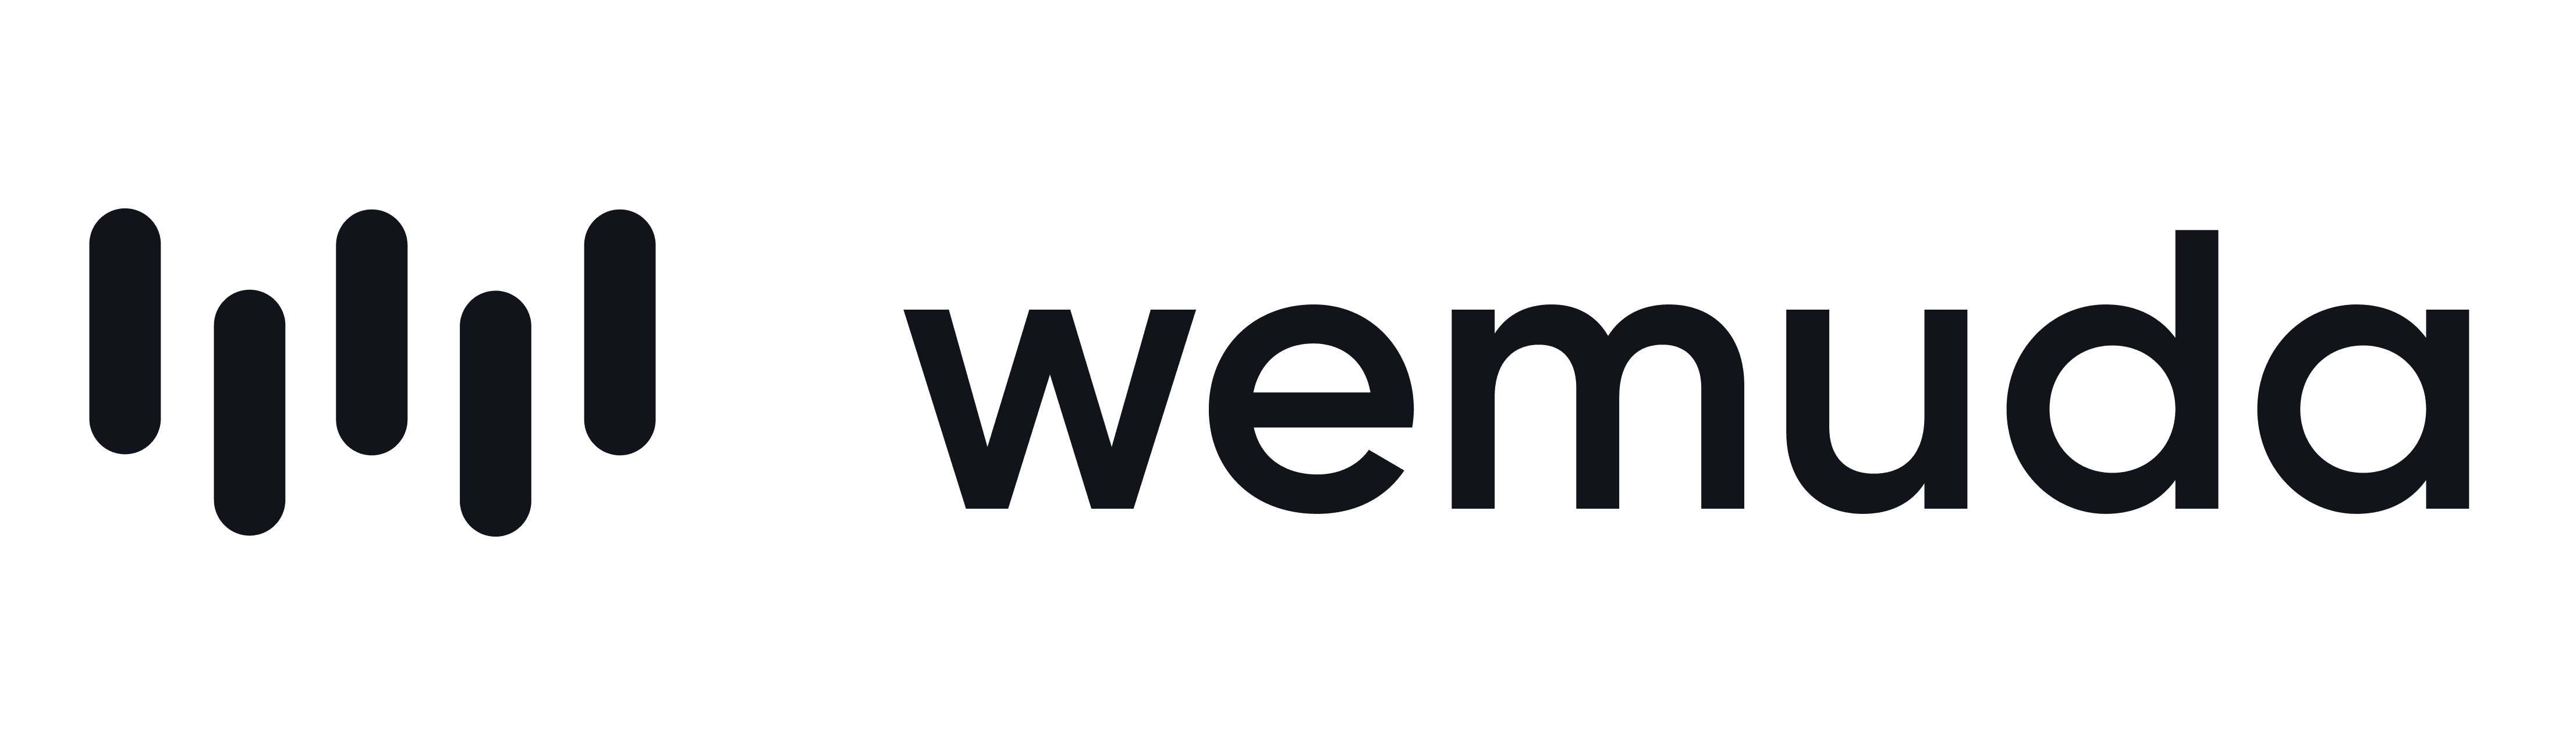 Wemuda_Logo - horizontal